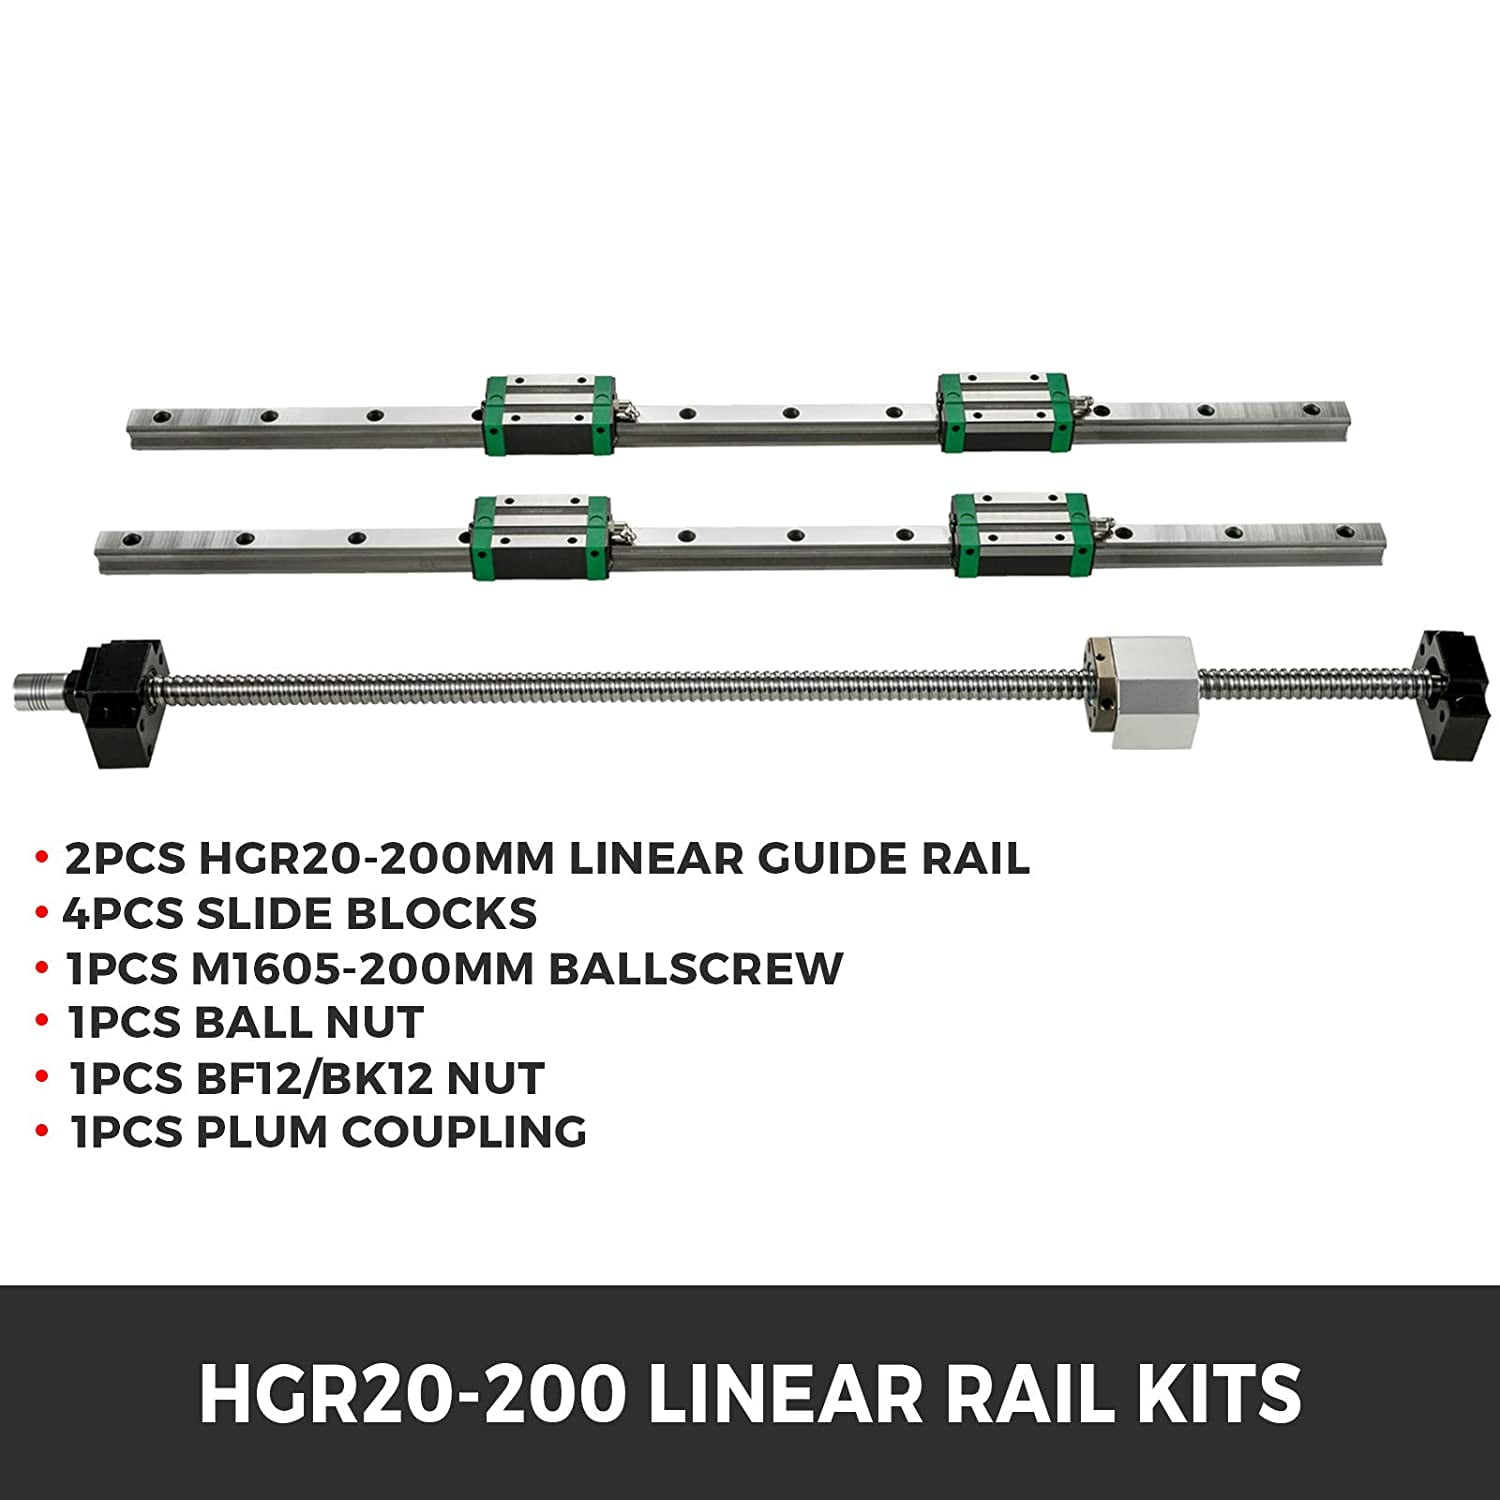 rm1605-200mm bala circulación husillo set 2stk hgr20-200mm linear liderazgo Guide Rail 